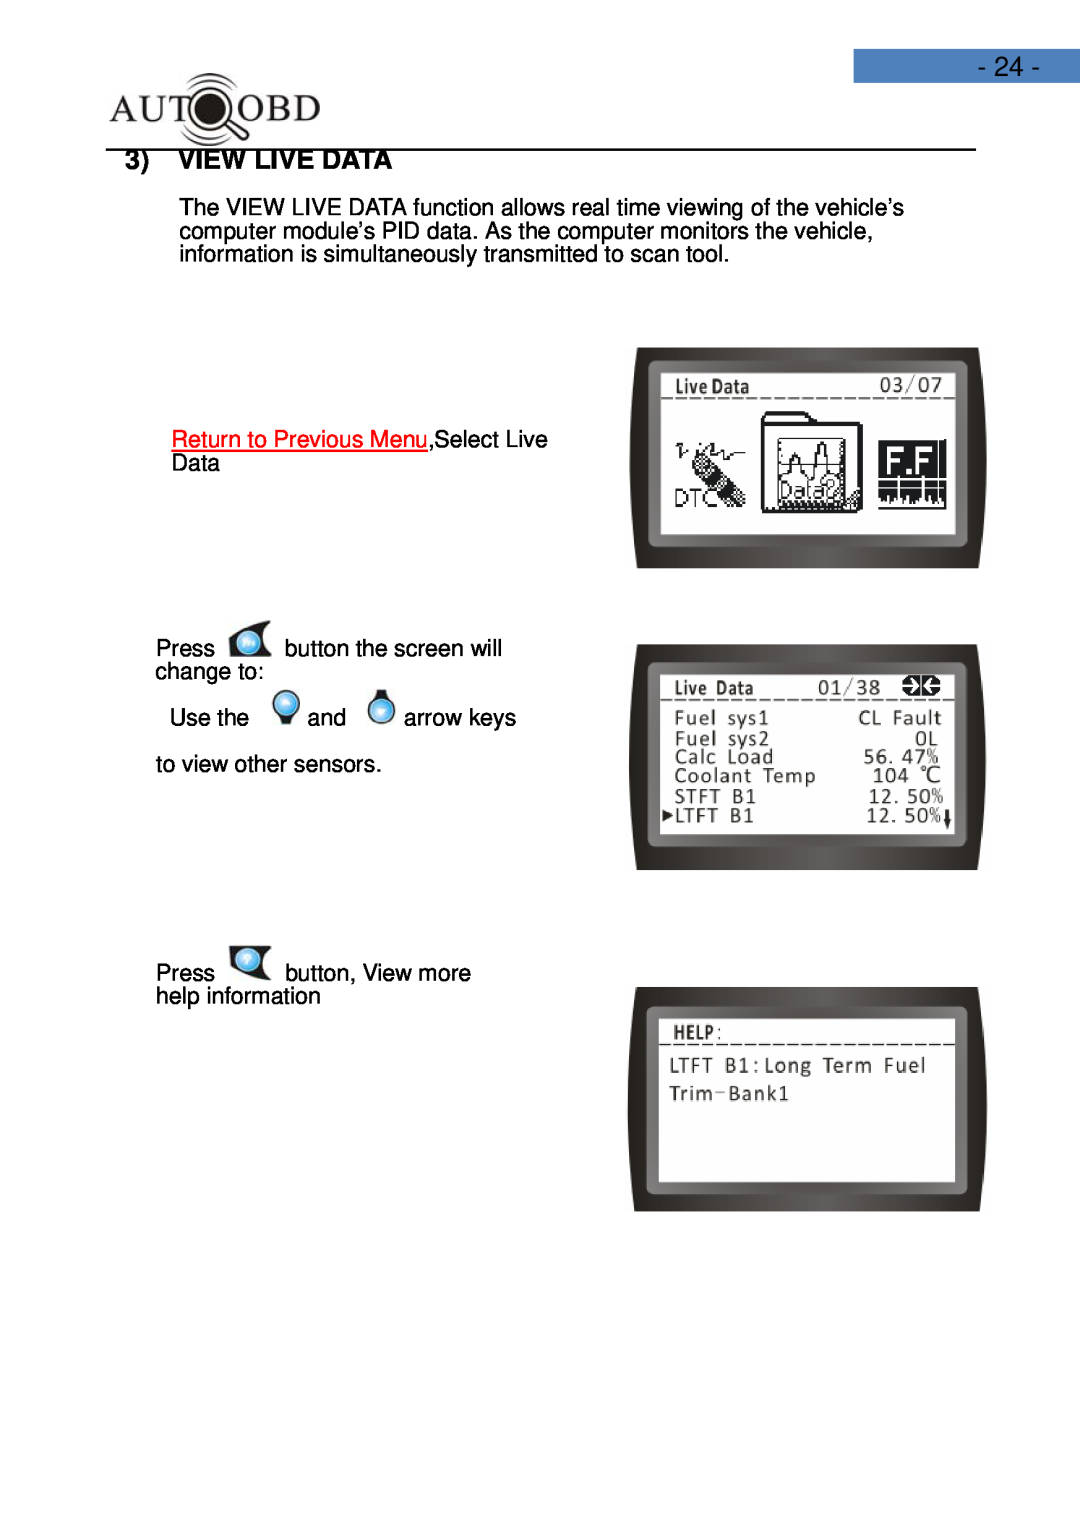 Daewoo AD100 user manual View Live Data, Return to Previous Menu,Select Live 